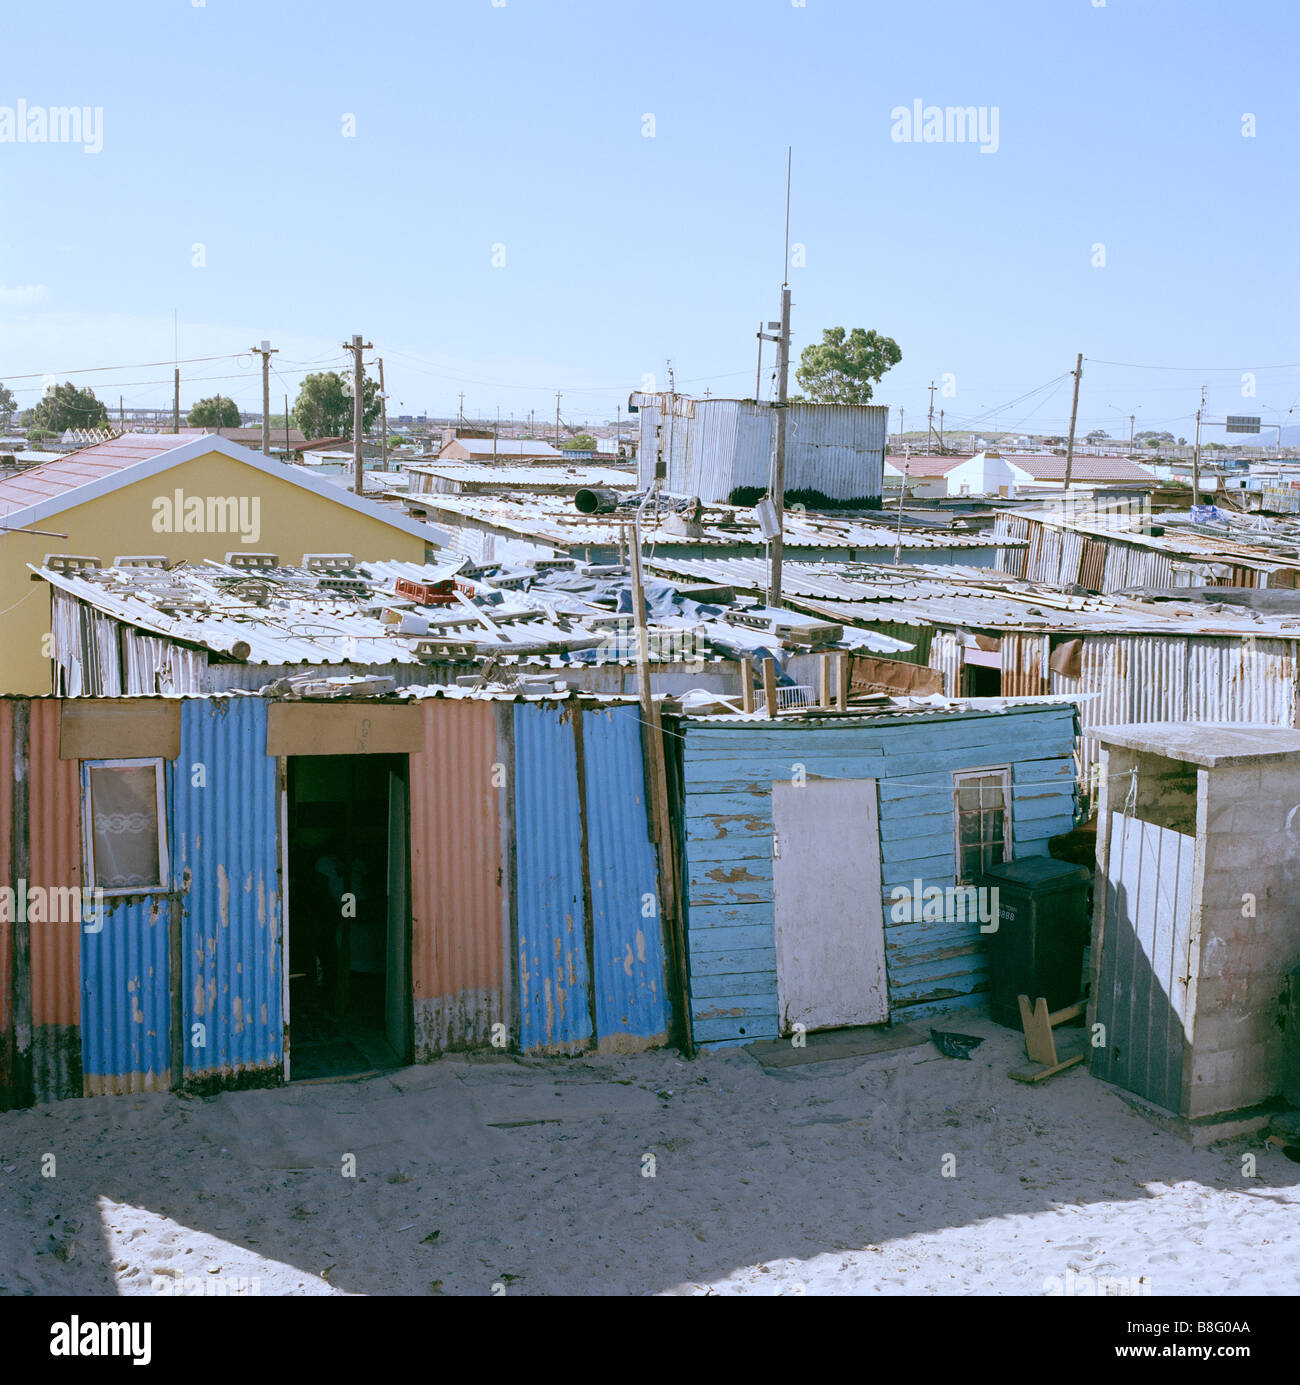 Khayelitsha Township von Kapstadt in Südafrika. Slum Armut Armen Gehäuse dokumentarische Reise Reportage Stockfoto